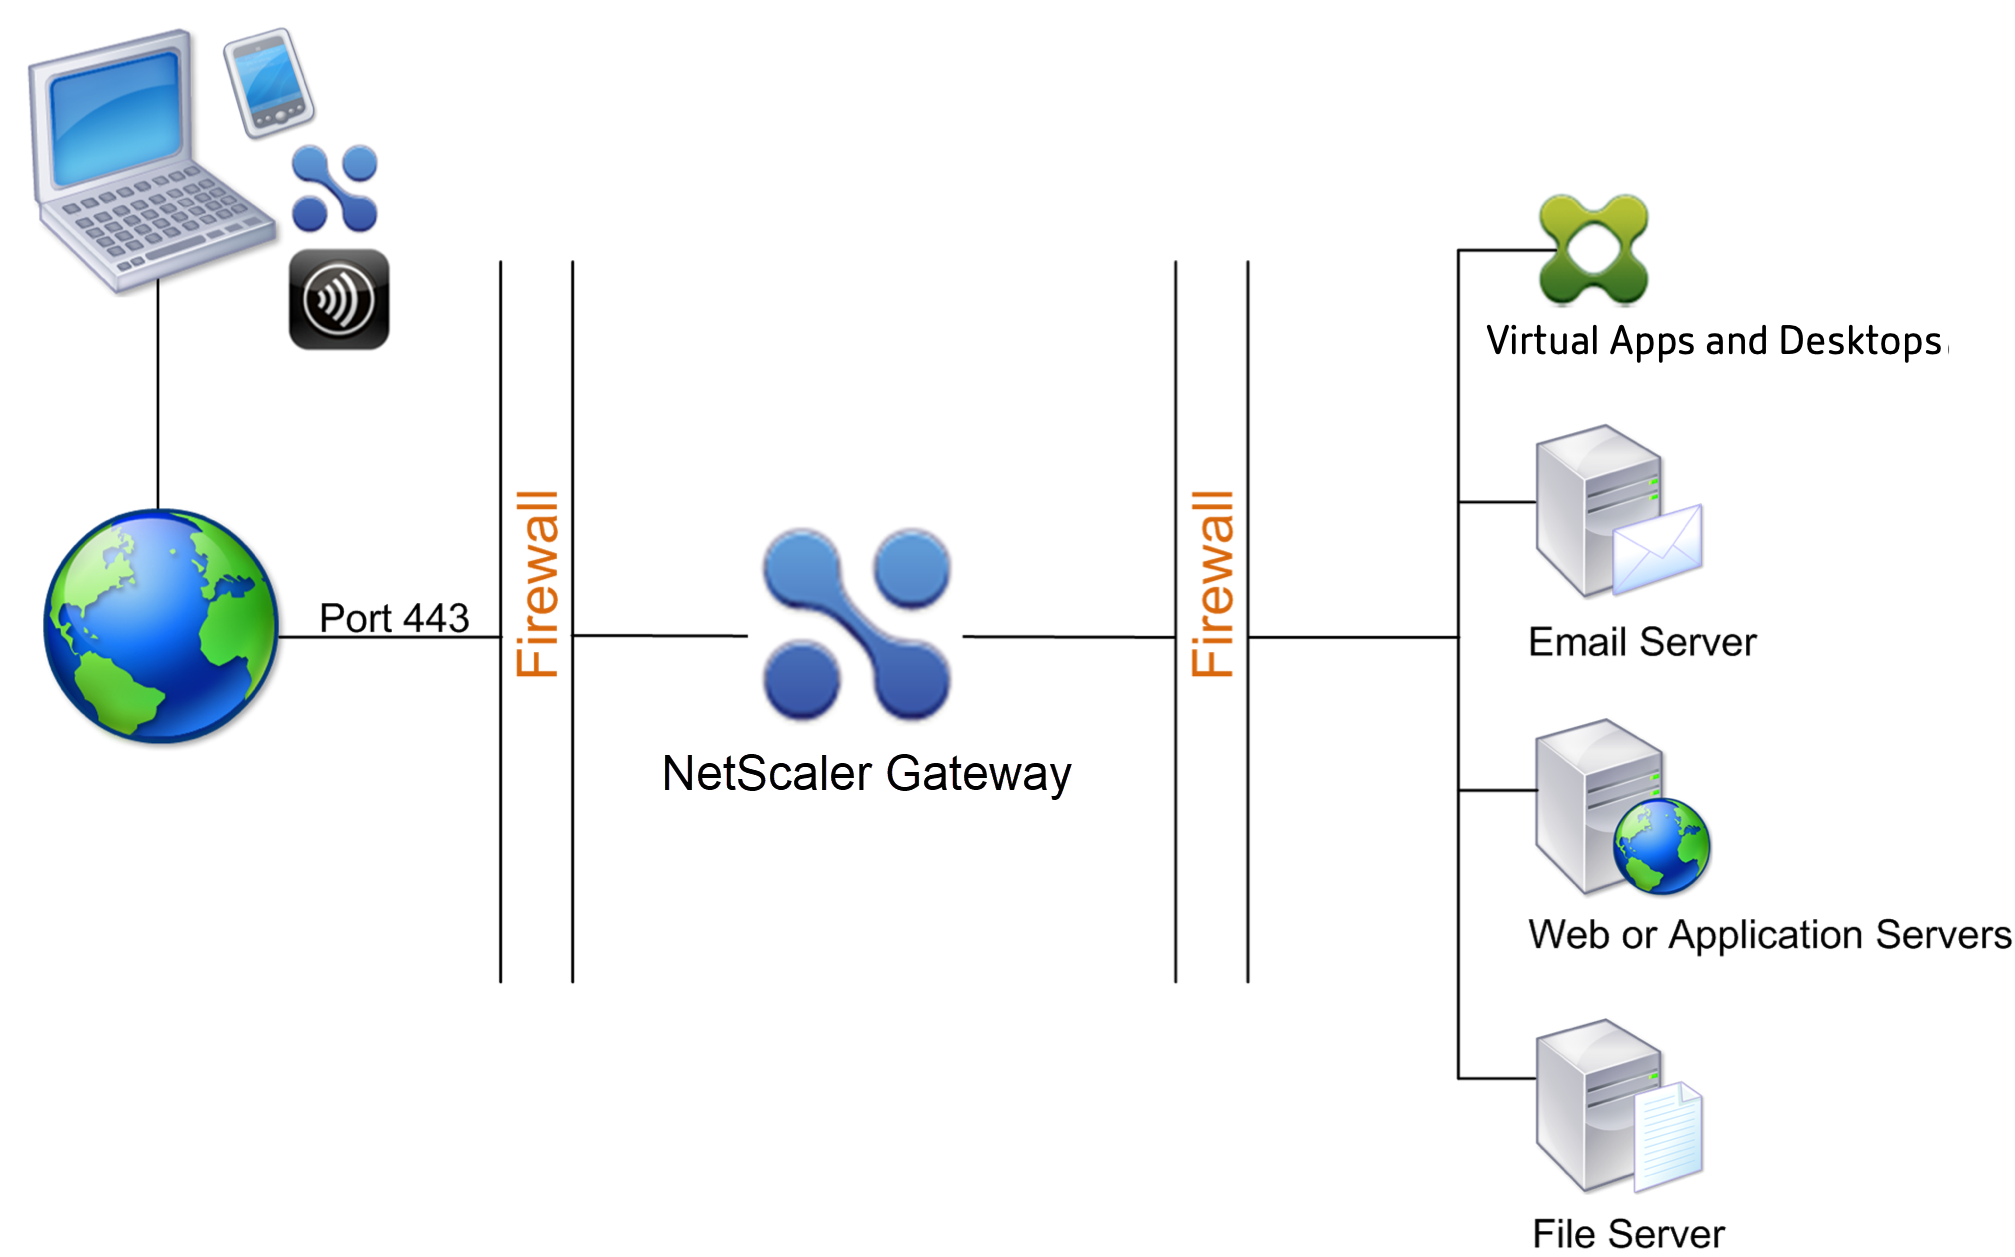 NetScaler Gateway deployed in the DMZ